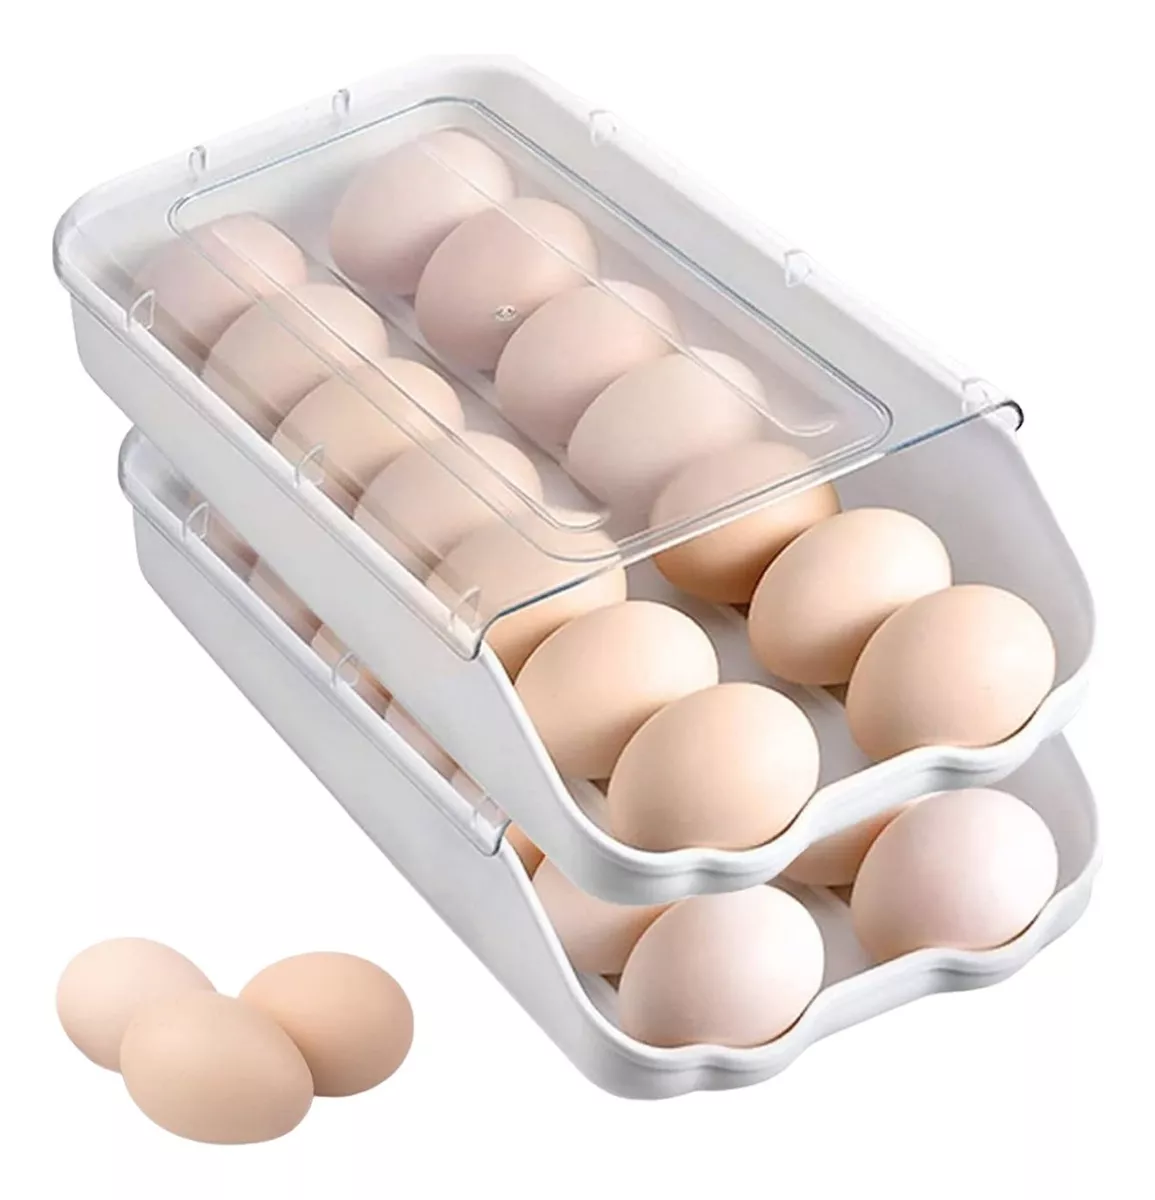 Segunda imagen para búsqueda de organizador de huevos